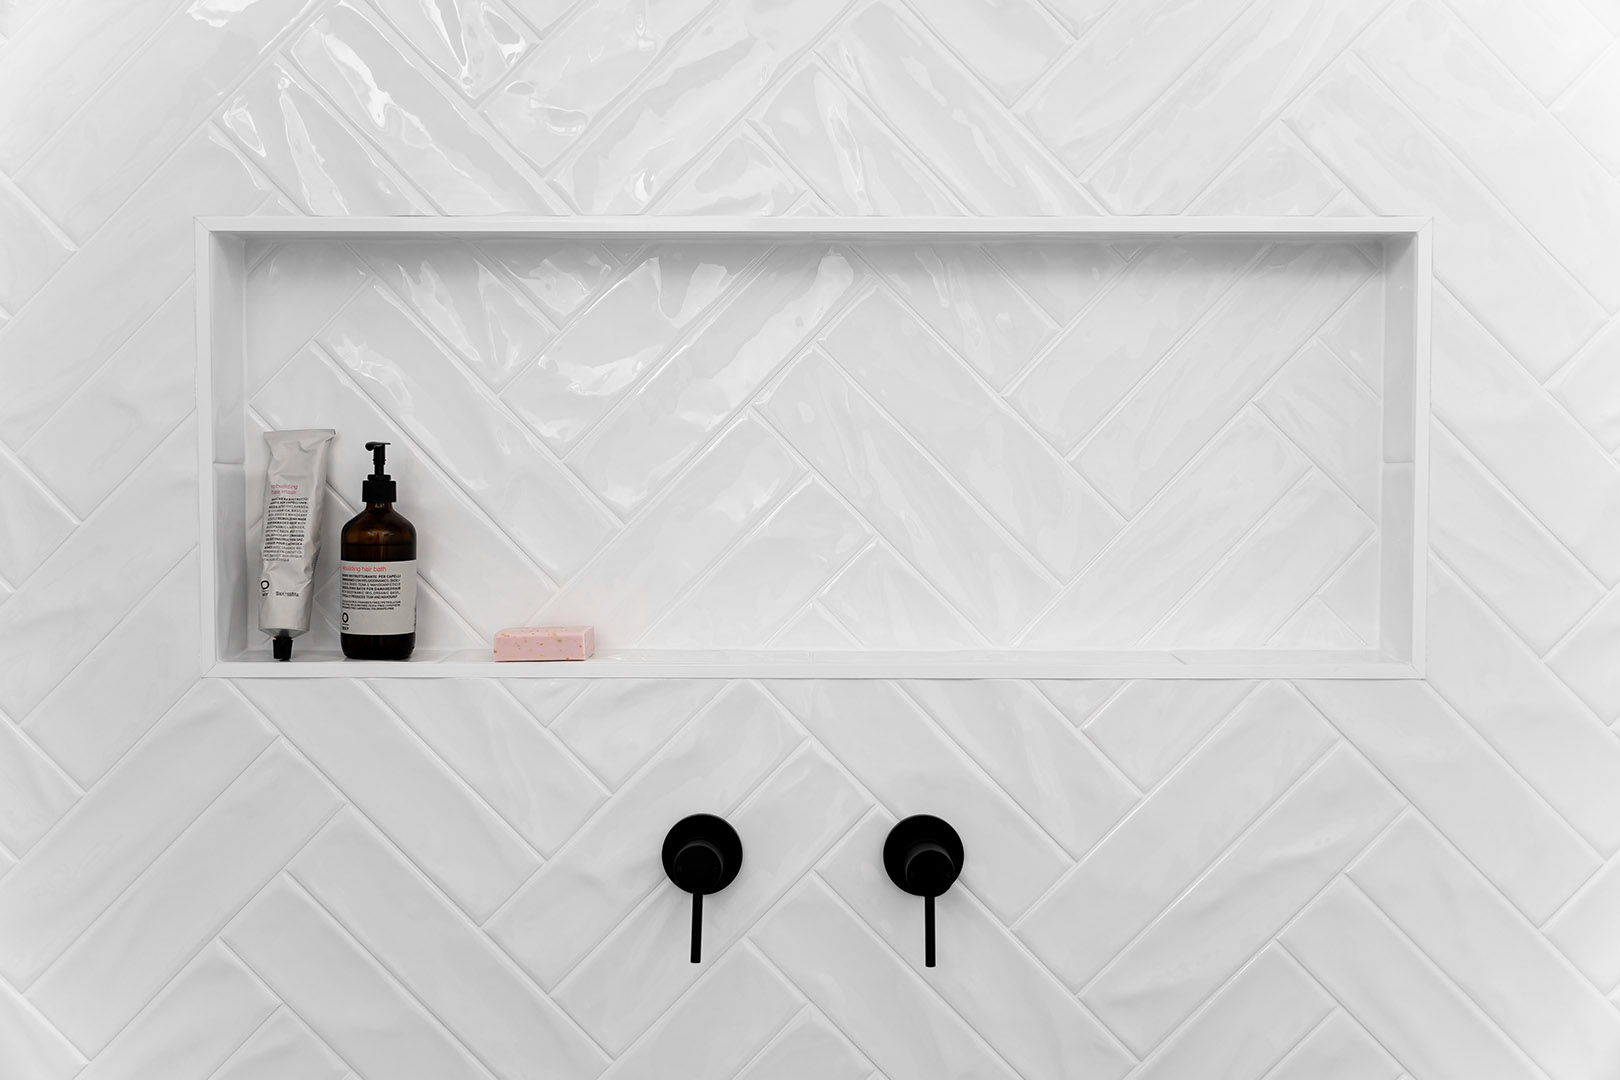 White doubel herringbone tile feature in shower niche